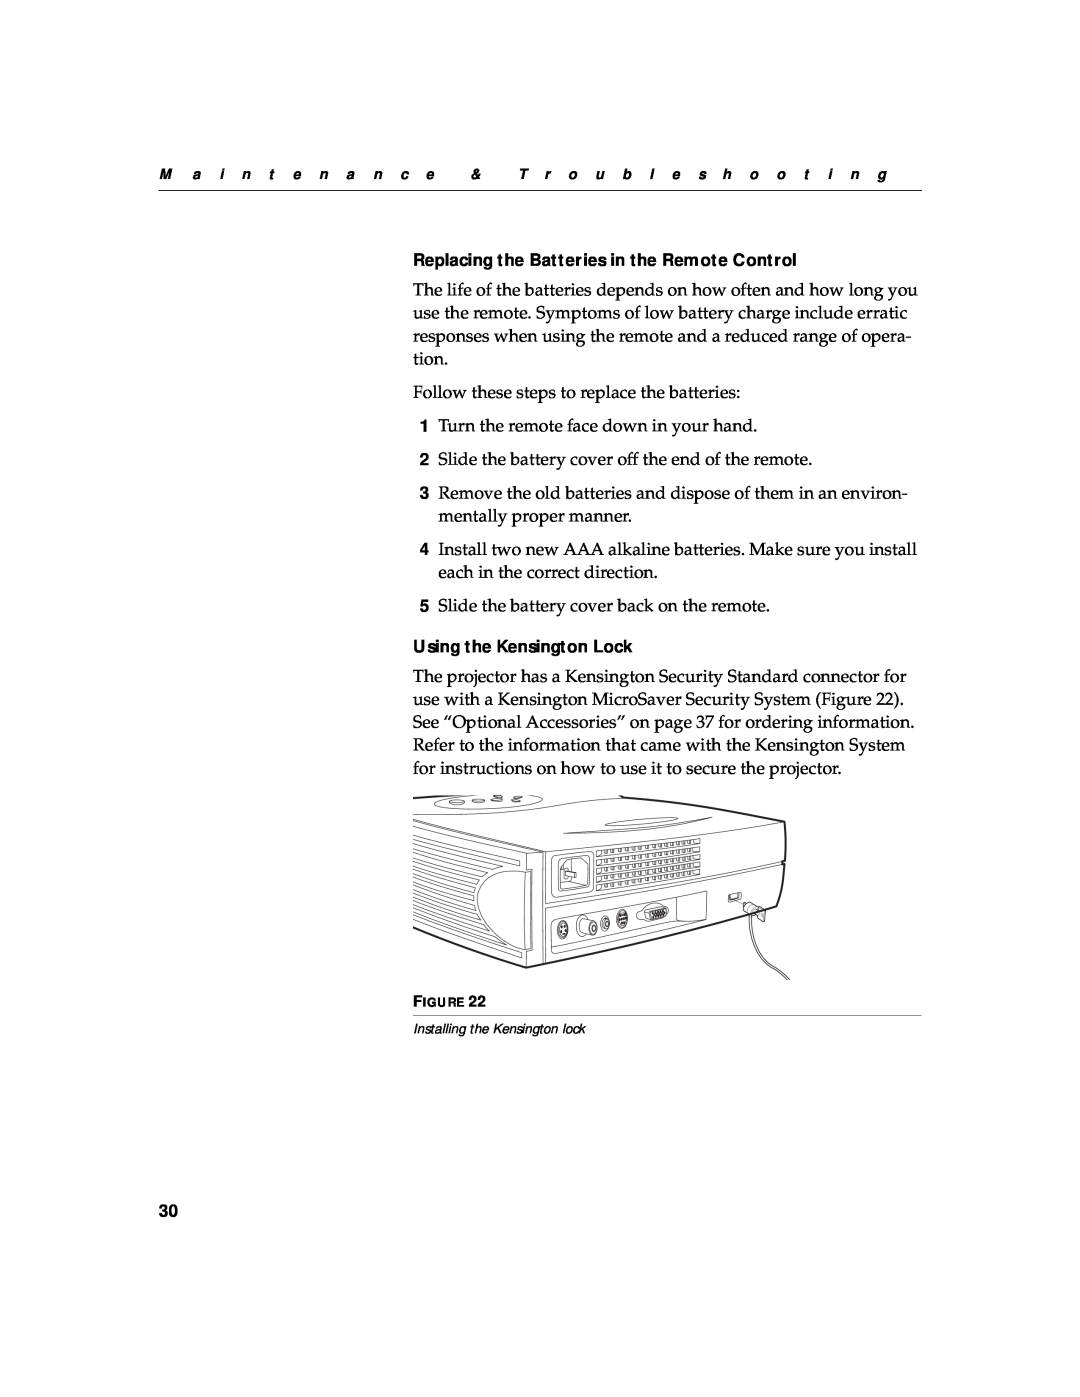 InFocus 330 manual Replacing the Batteries in the Remote Control, Using the Kensington Lock 